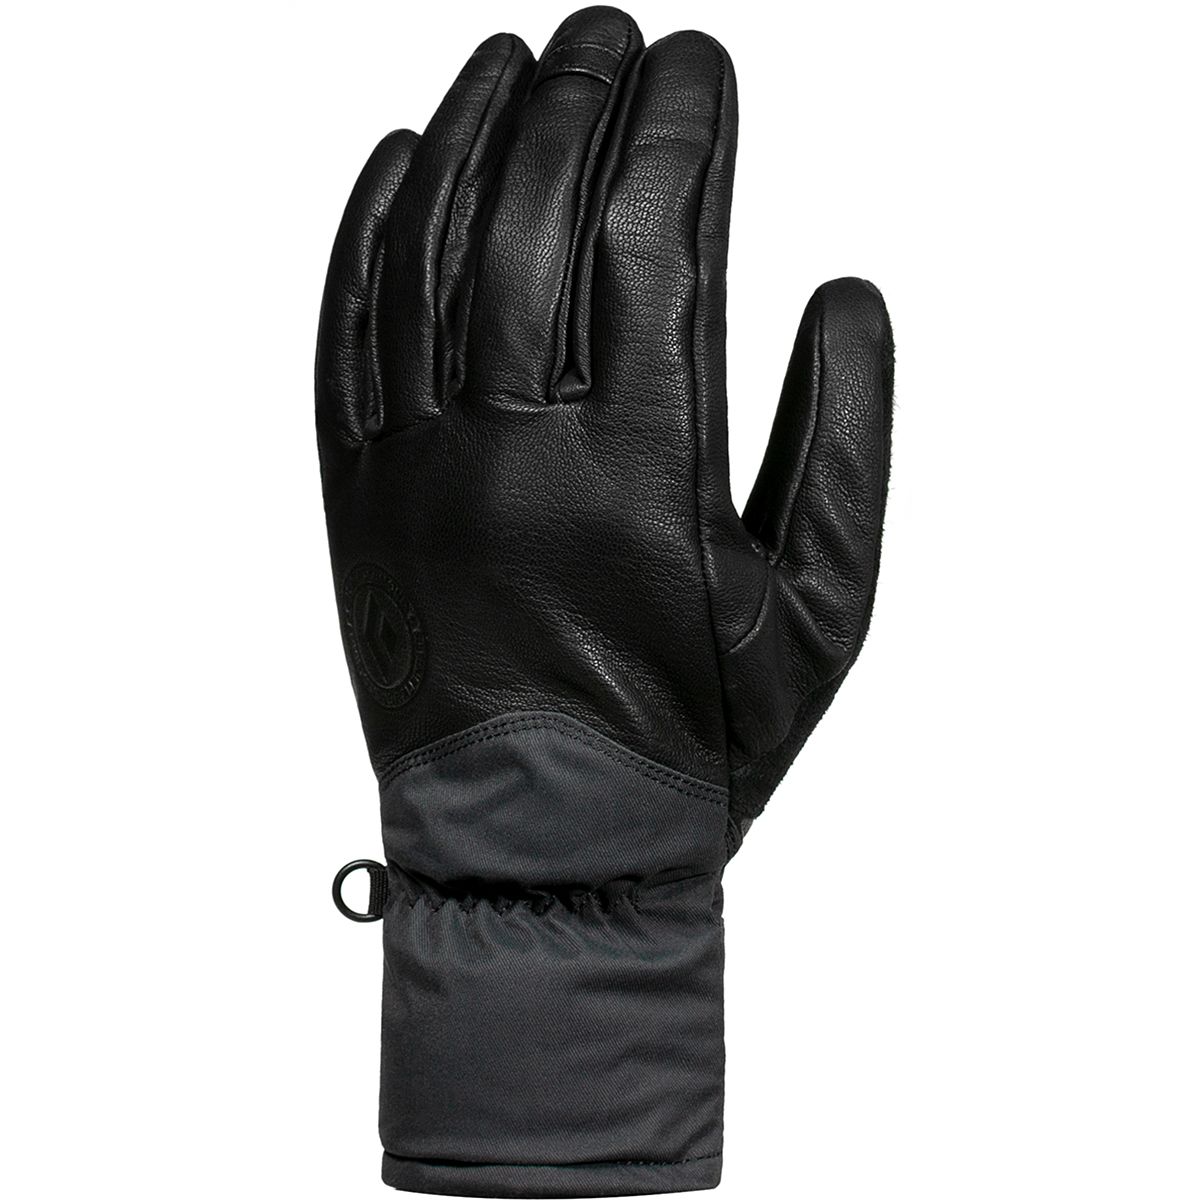 Backcountry x Black Diamond Hot Lap Glove